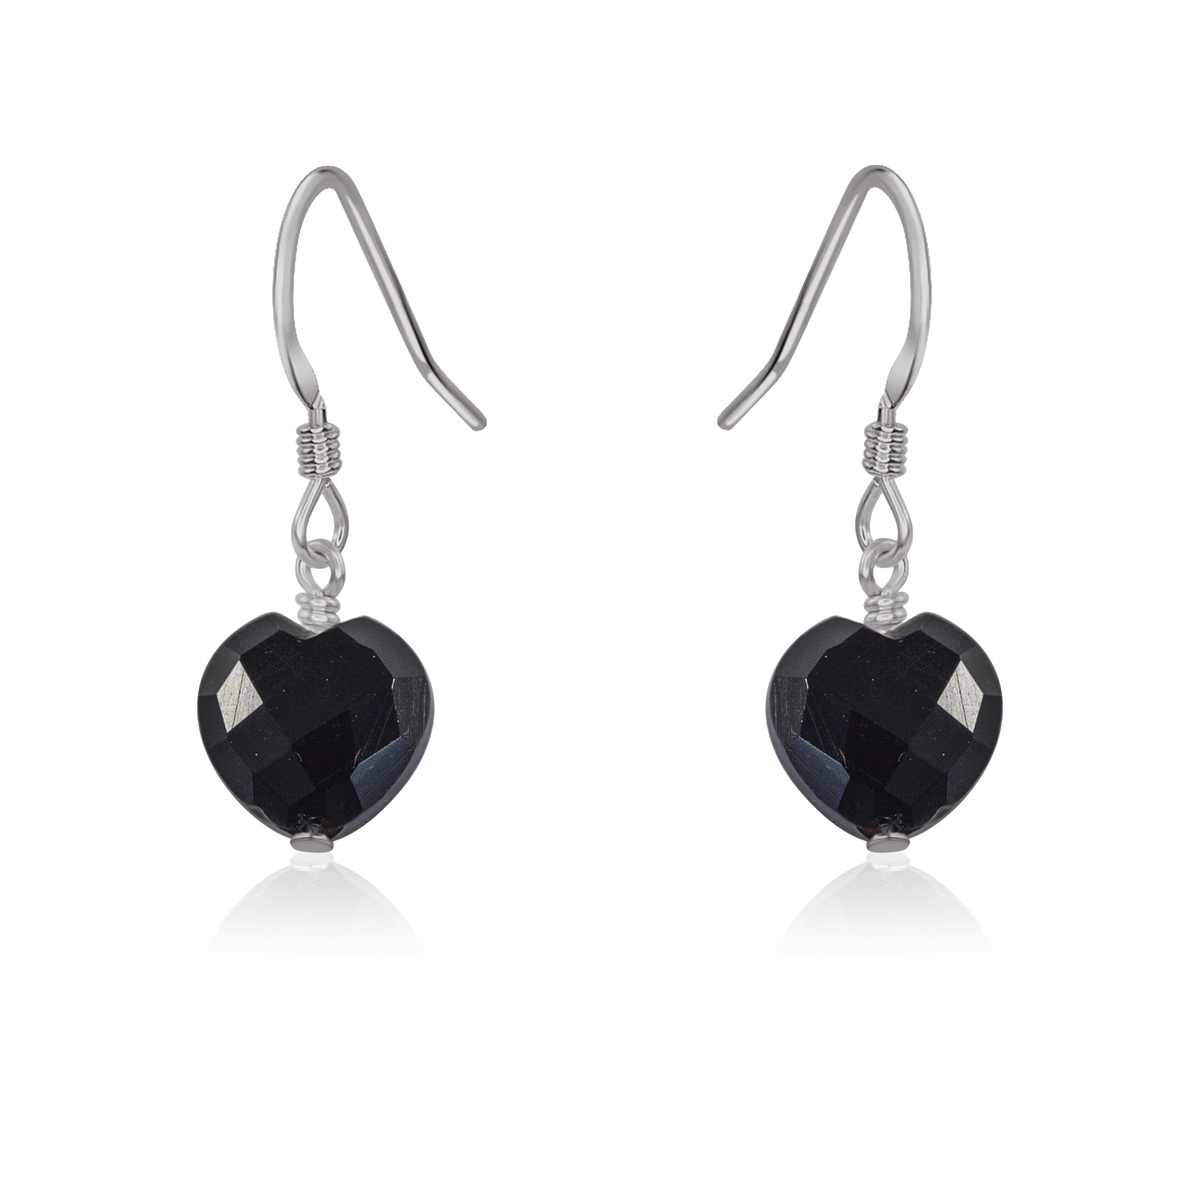 Black Onyx Crystal Heart Dangle Earrings - Black Onyx Crystal Heart Dangle Earrings - Stainless Steel - Luna Tide Handmade Crystal Jewellery